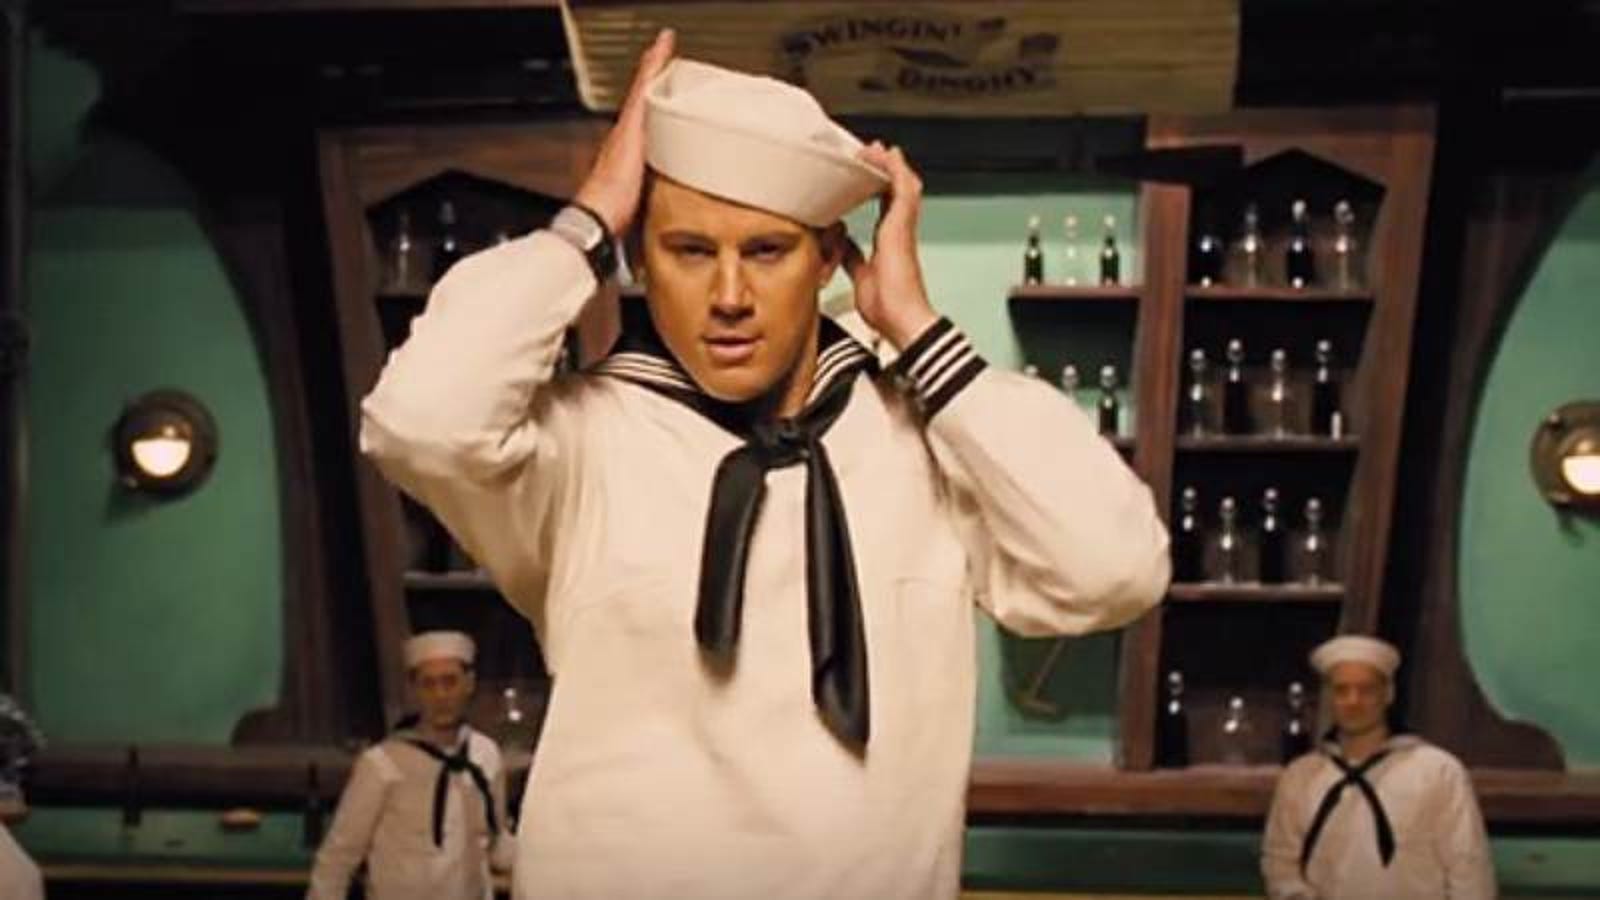 Channing Tatum will voice George Washington in Netflix’s first animated